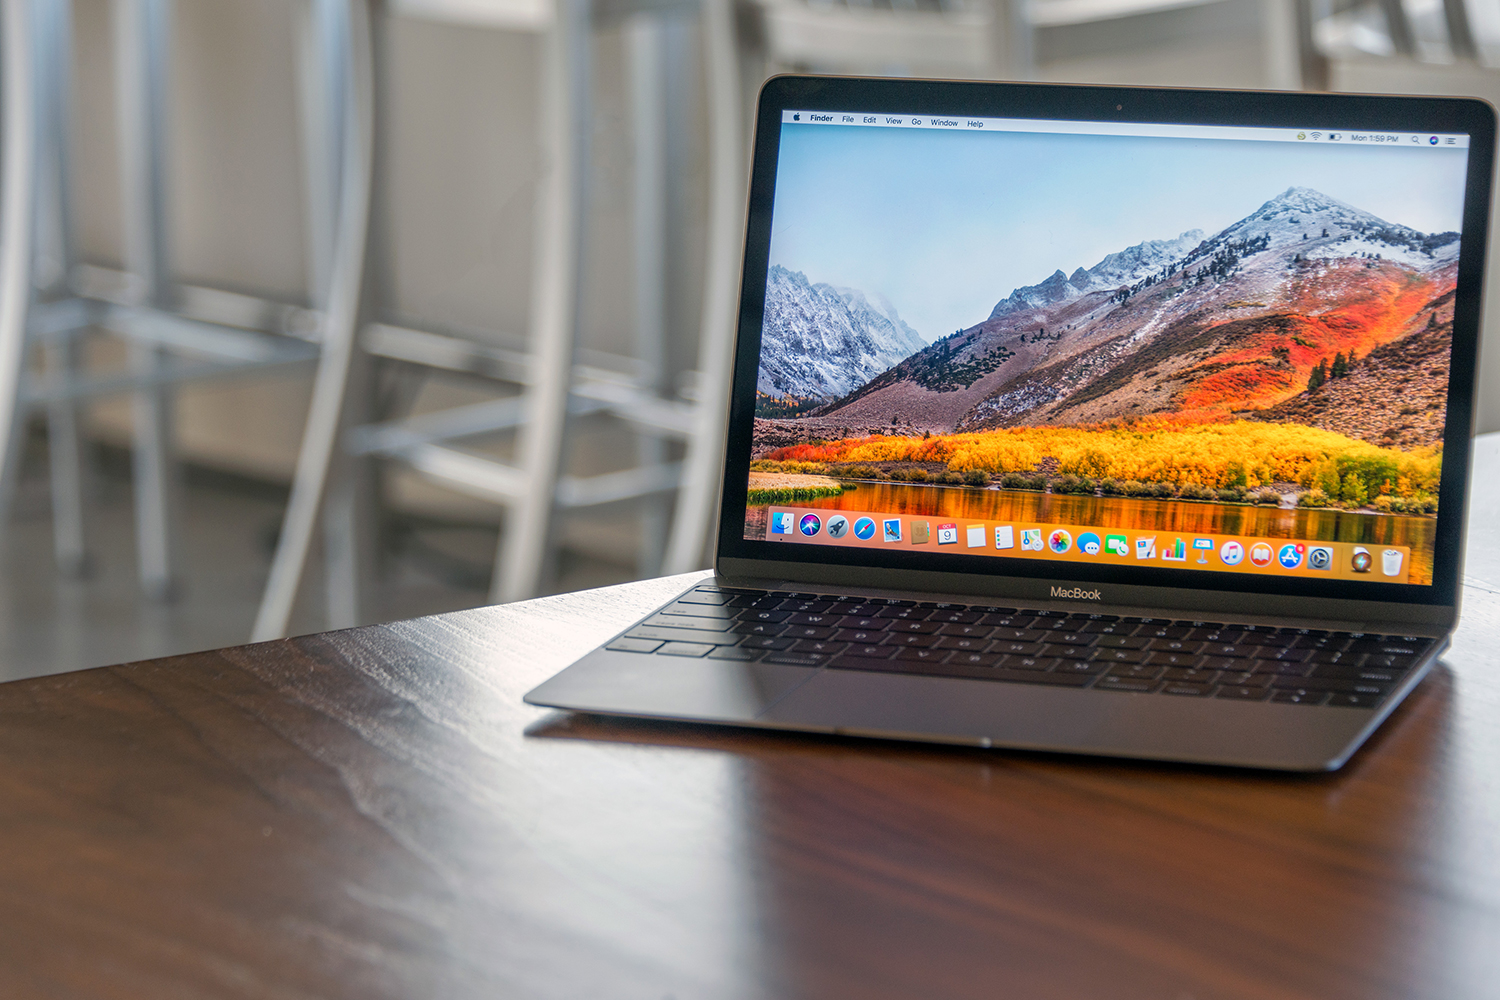  Apple MacBook 12in Retina 2017 (Newest Version) 256GB